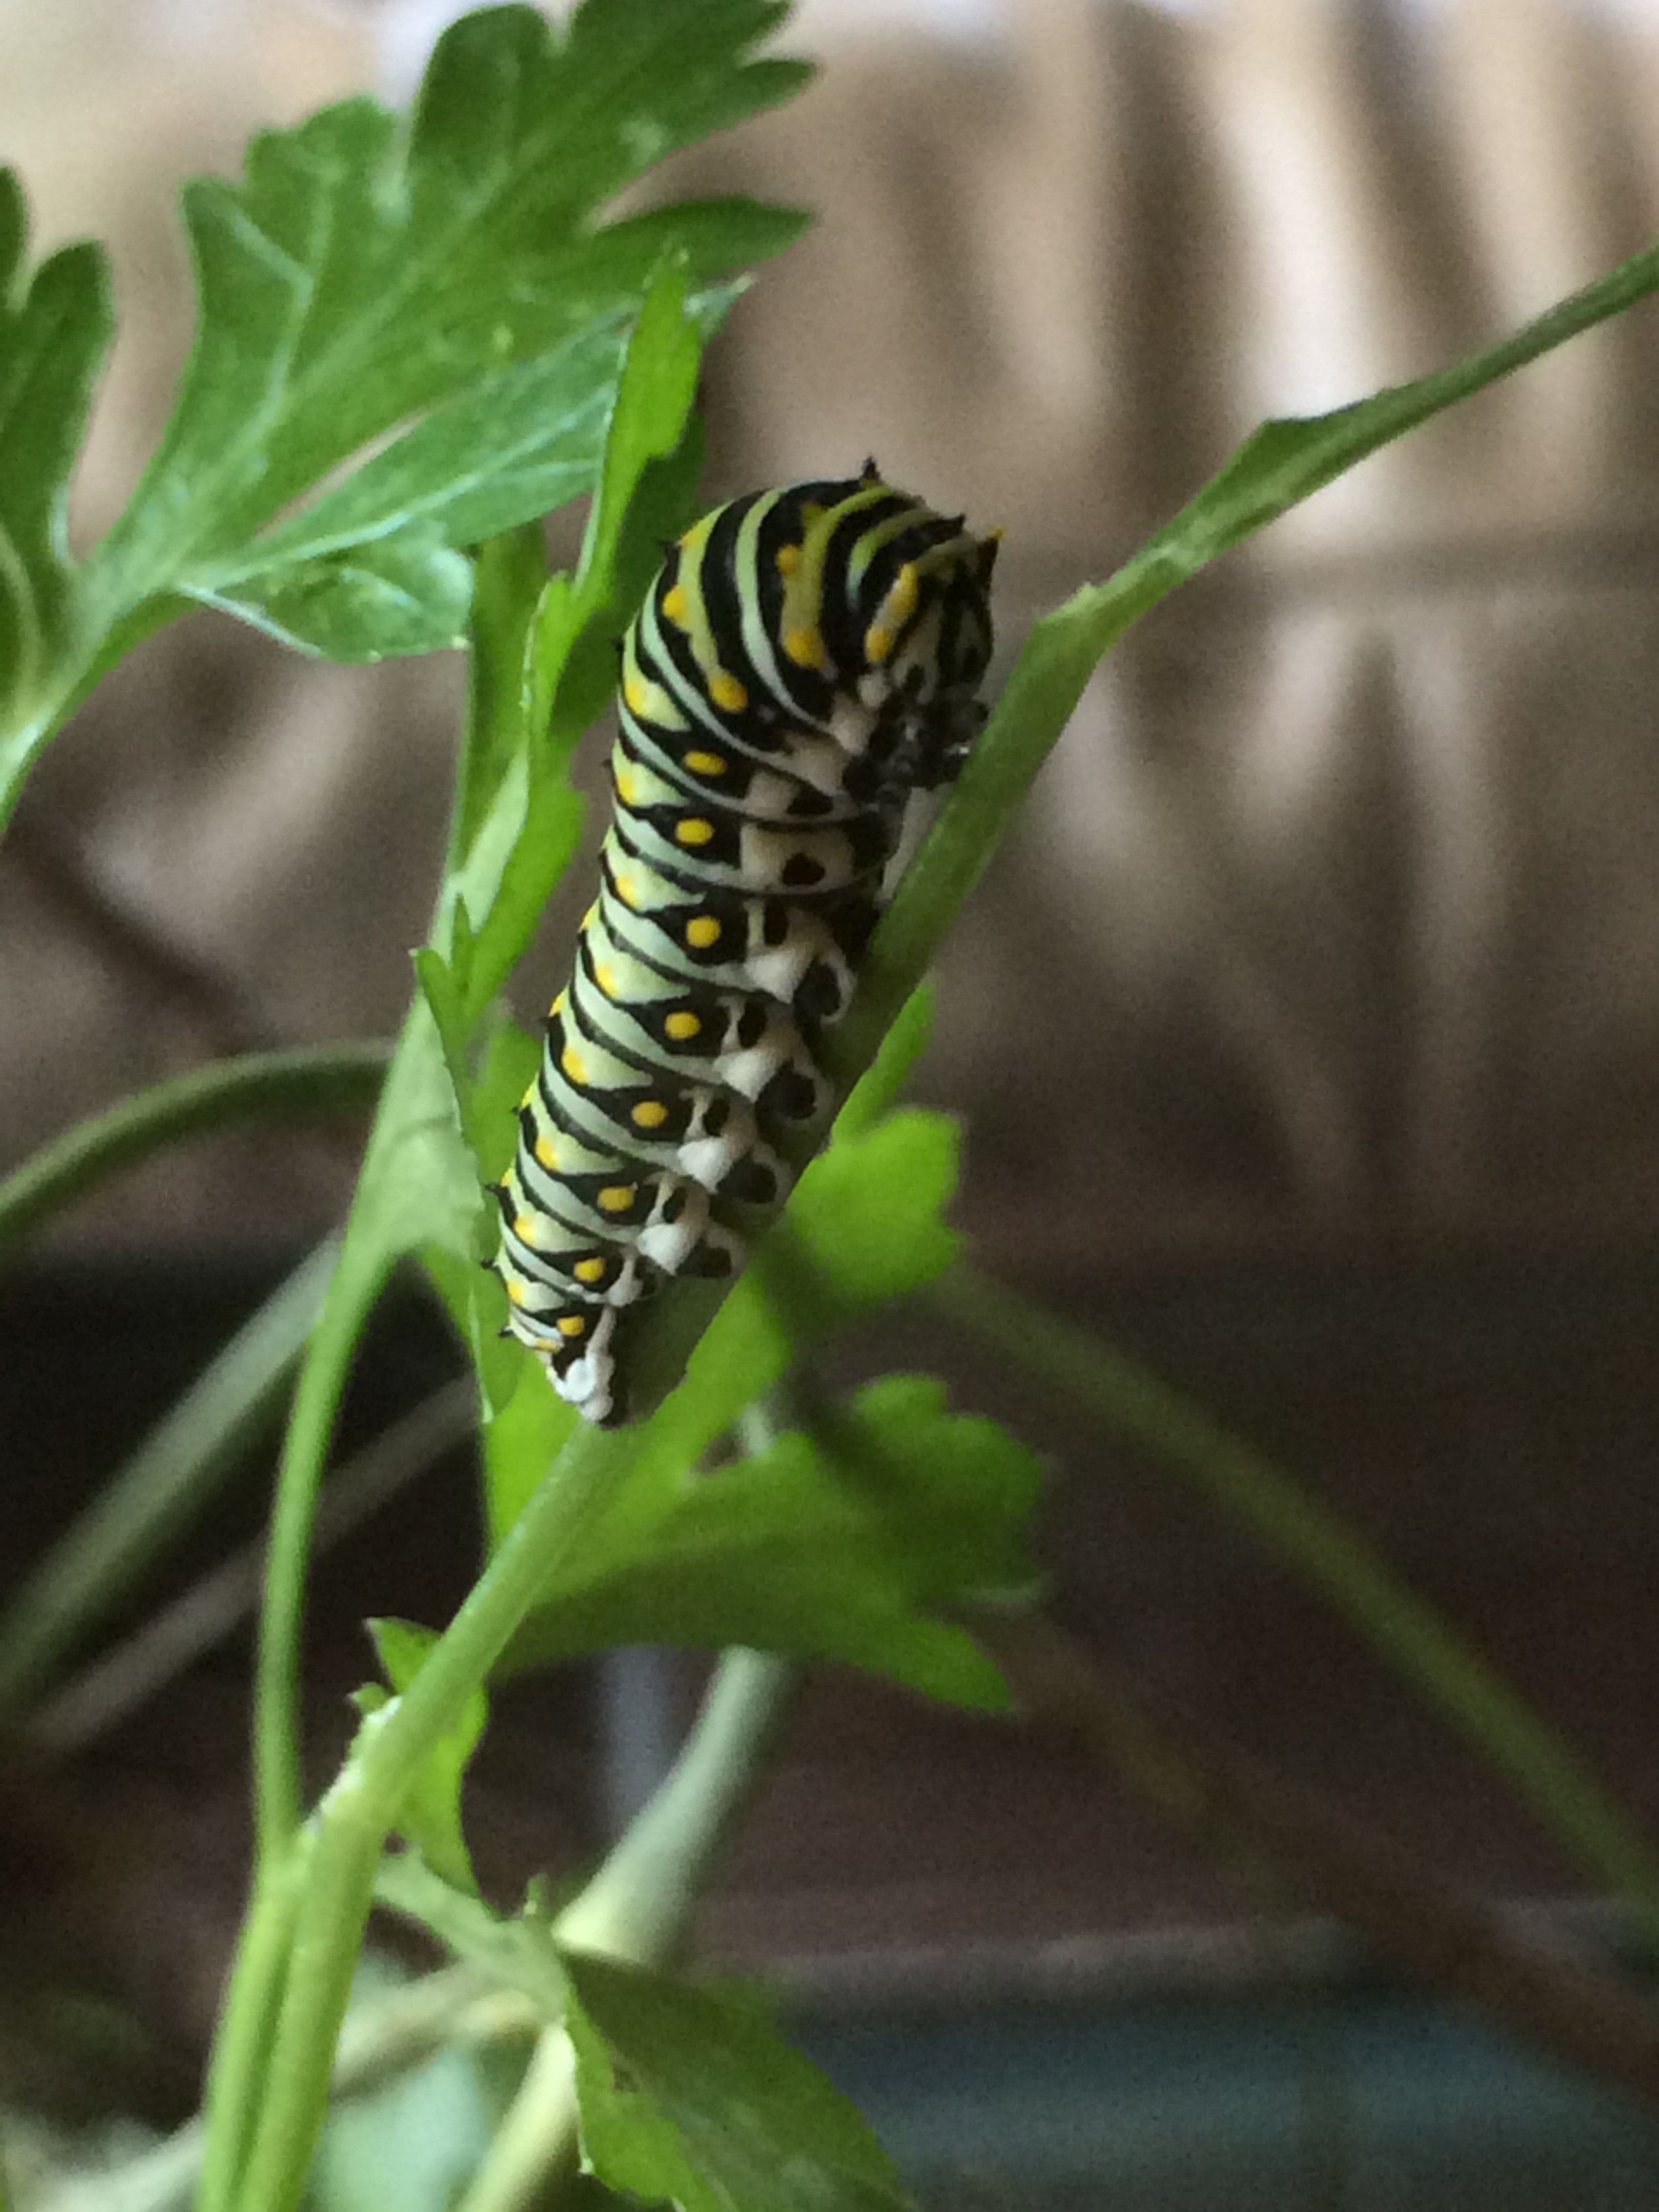 Caterpillar resting